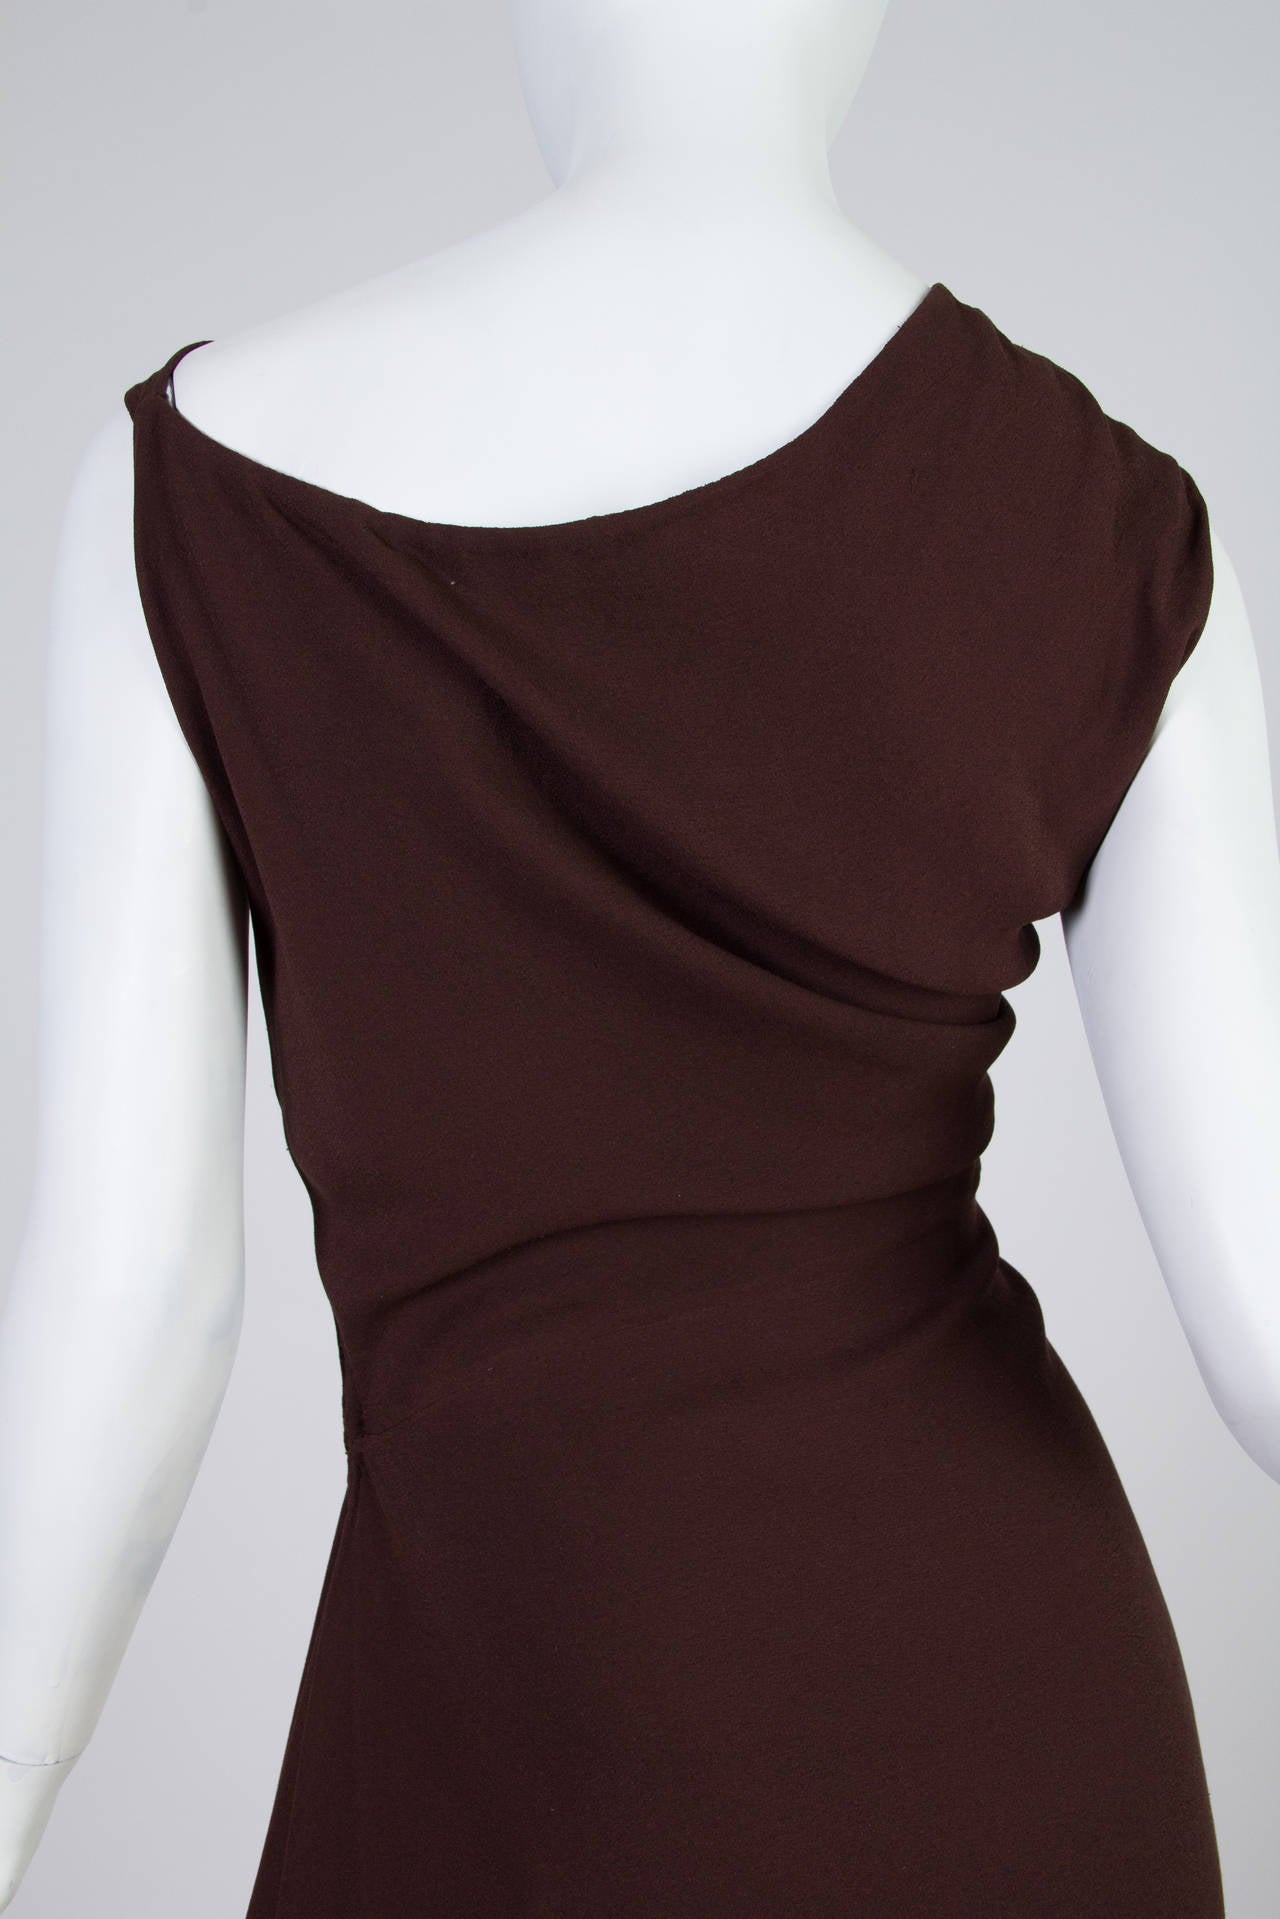 Tom Ford for Gucci Asymmetrical Silk Jersey Dress 1